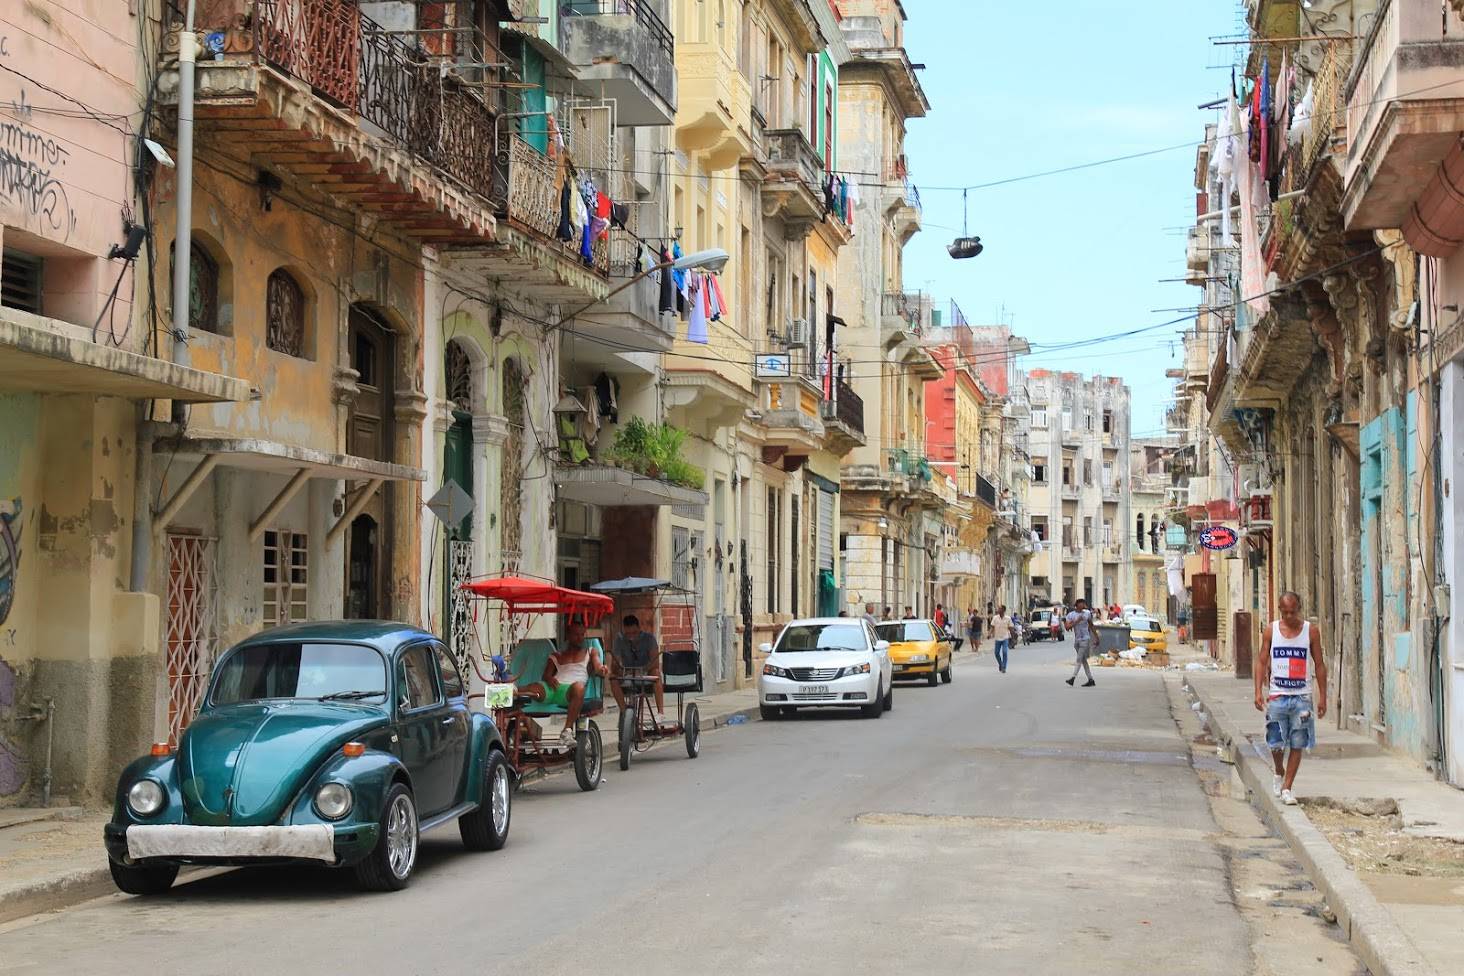 Niezapomniany klimat Havany [PL] The unforgettable atmosphere of Havana [ENG]